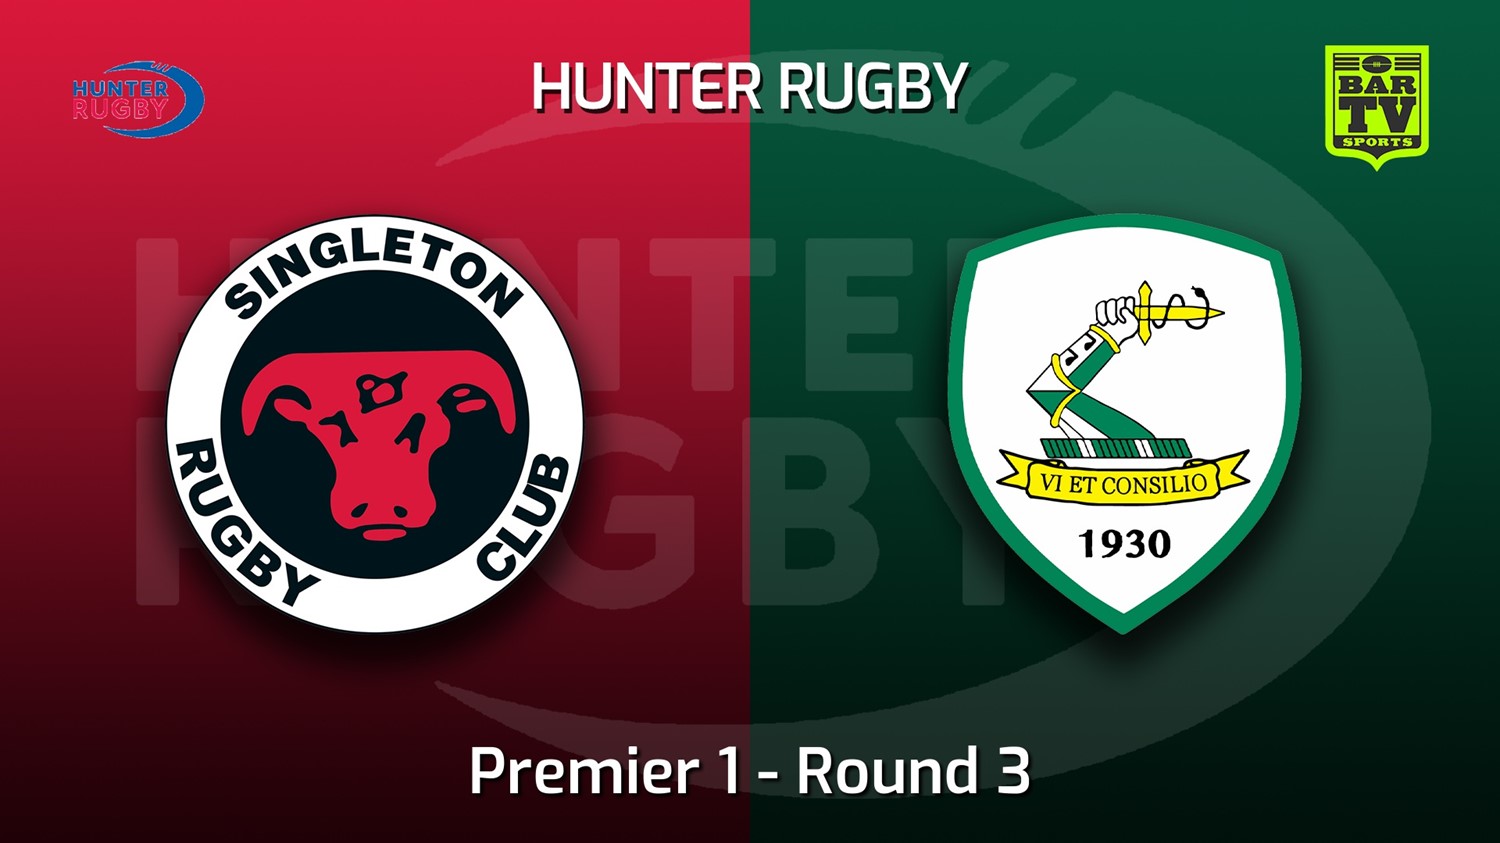 220507-Hunter Rugby Round 3 - Premier 1 - Singleton Bulls v Merewether Carlton Slate Image